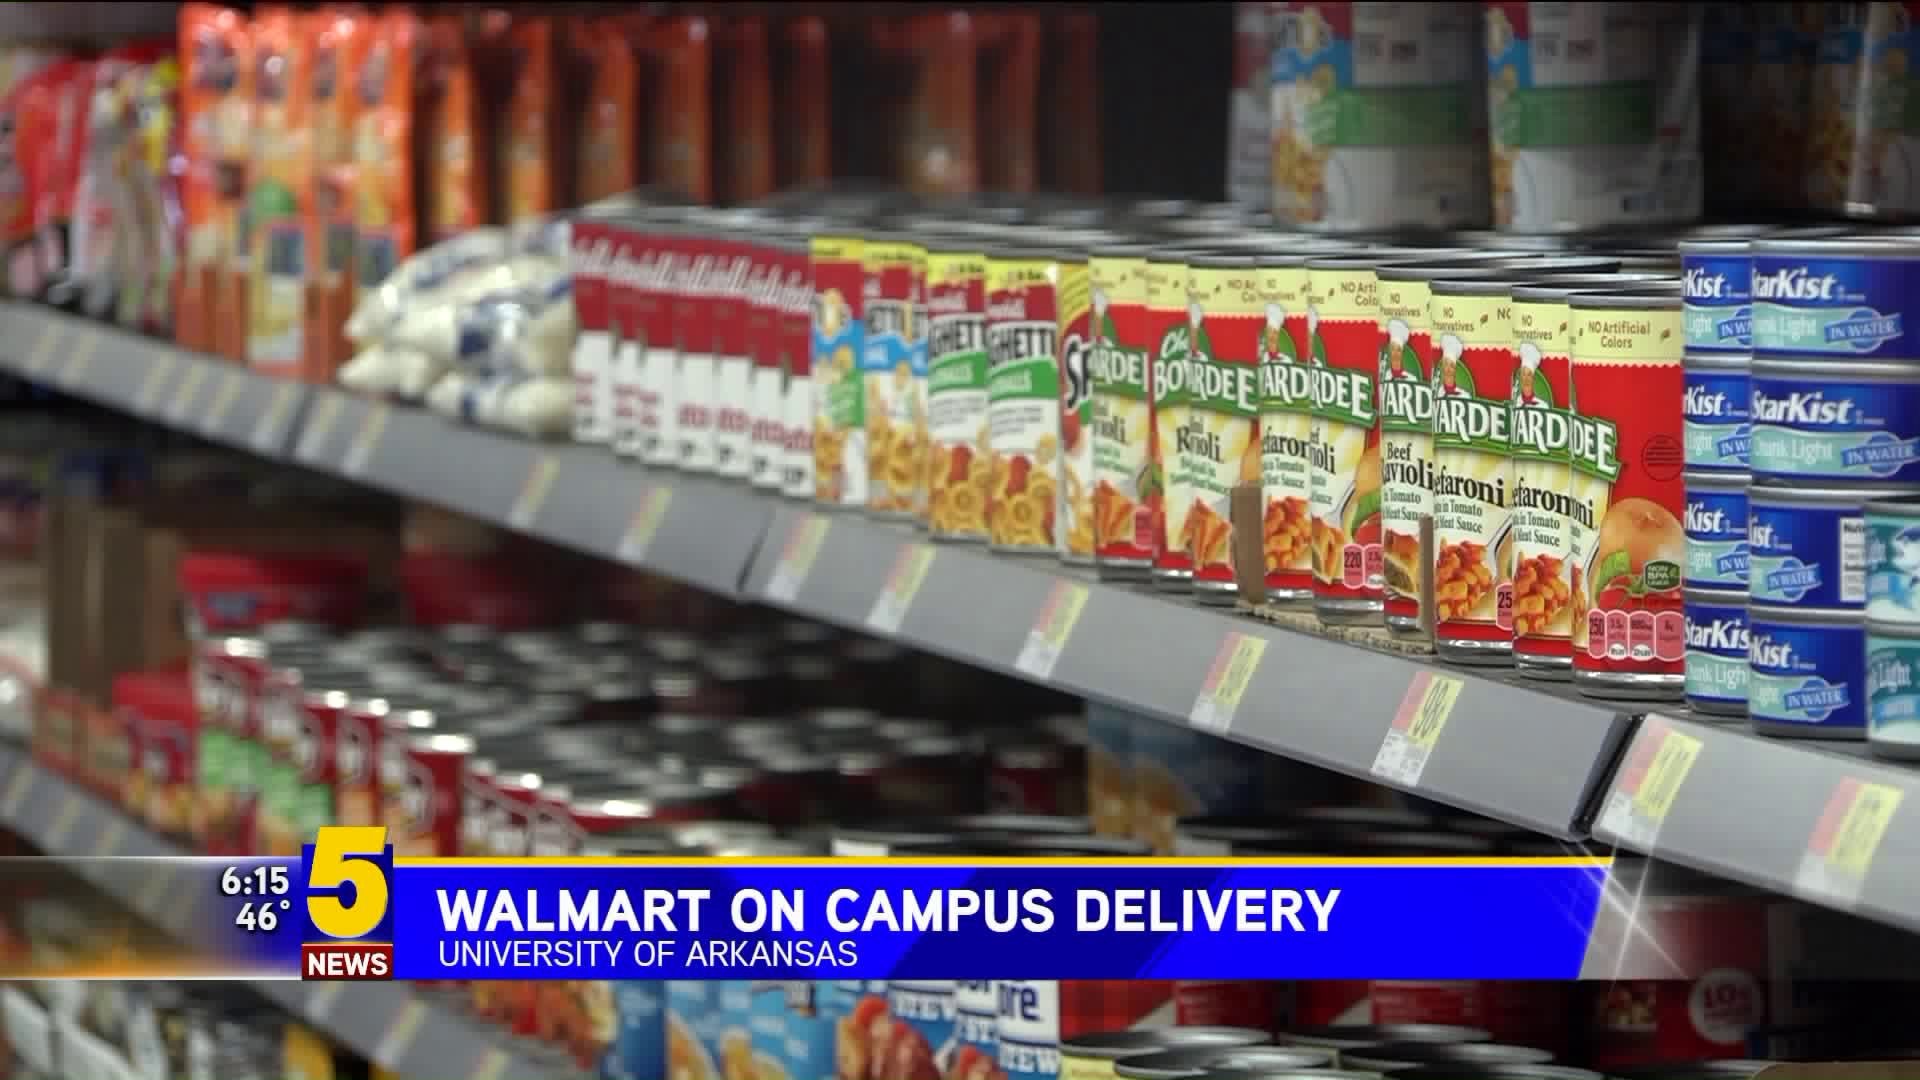 Walmart On Campus Delivery